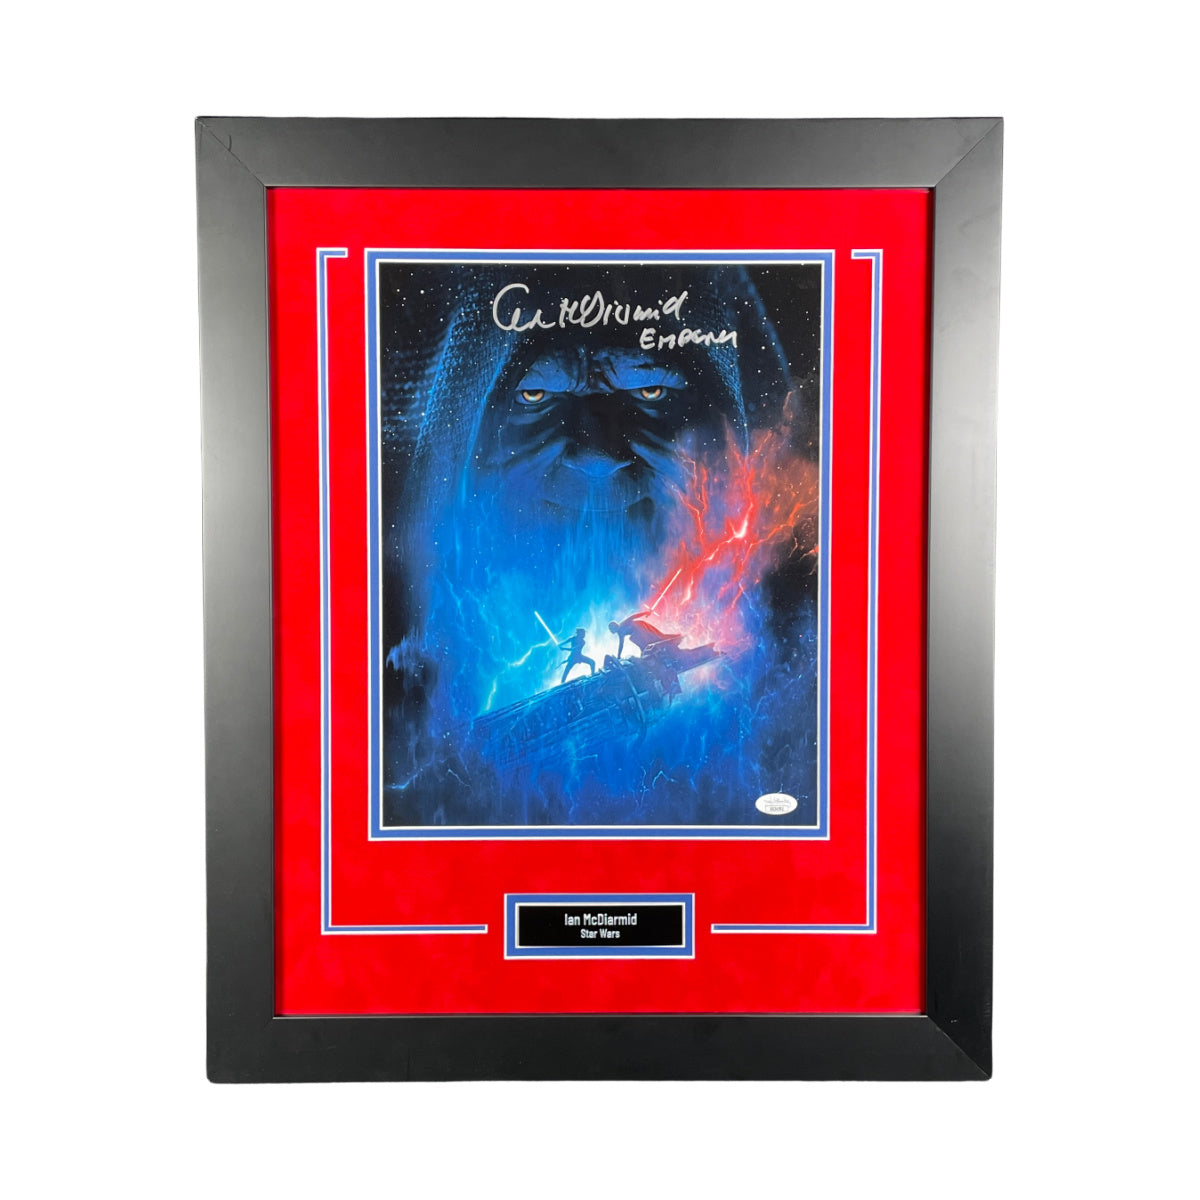 Ian McDiarmid Signed 11x14 Photograph Custom Framed Star Wars Autographed JSA COA